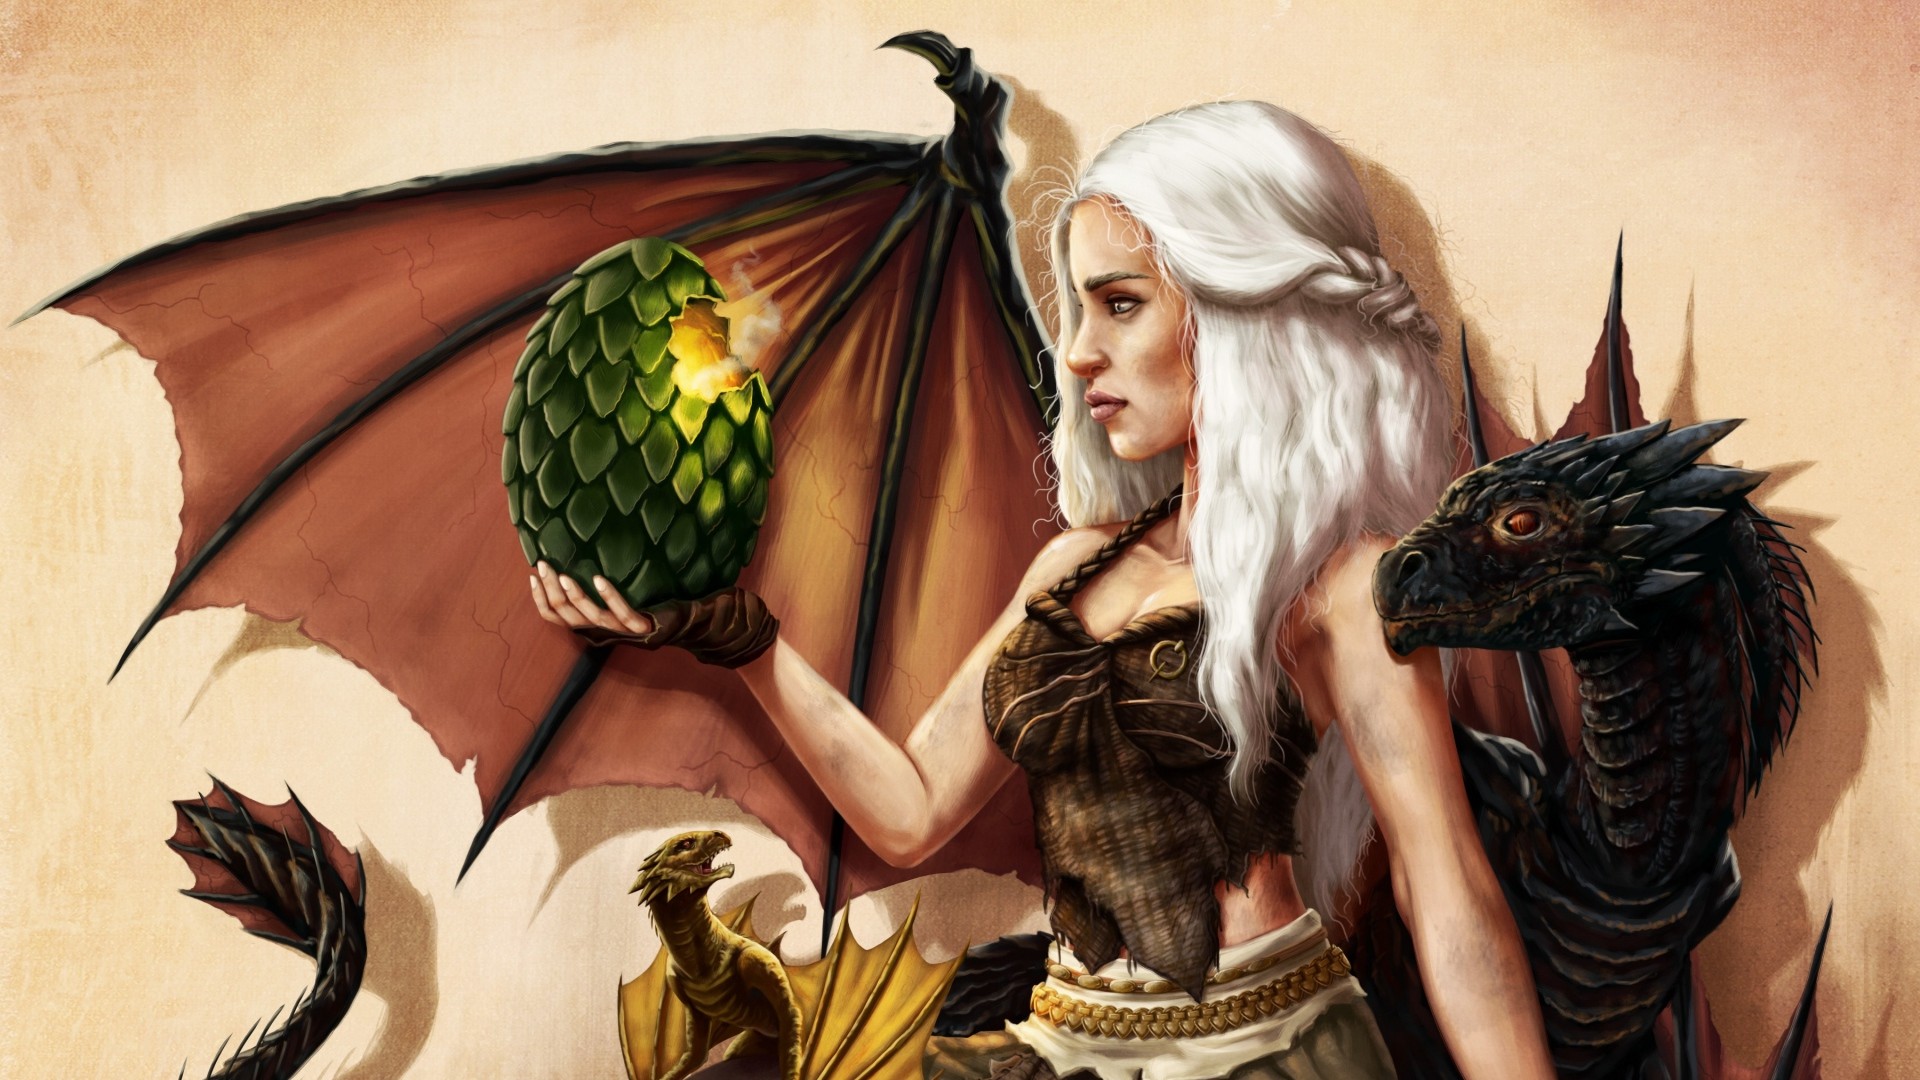 General 1920x1080 Daenerys Targaryen Game of Thrones dragon creature eggs fantasy art fan art TV series women face profile wings long hair fantasy girl